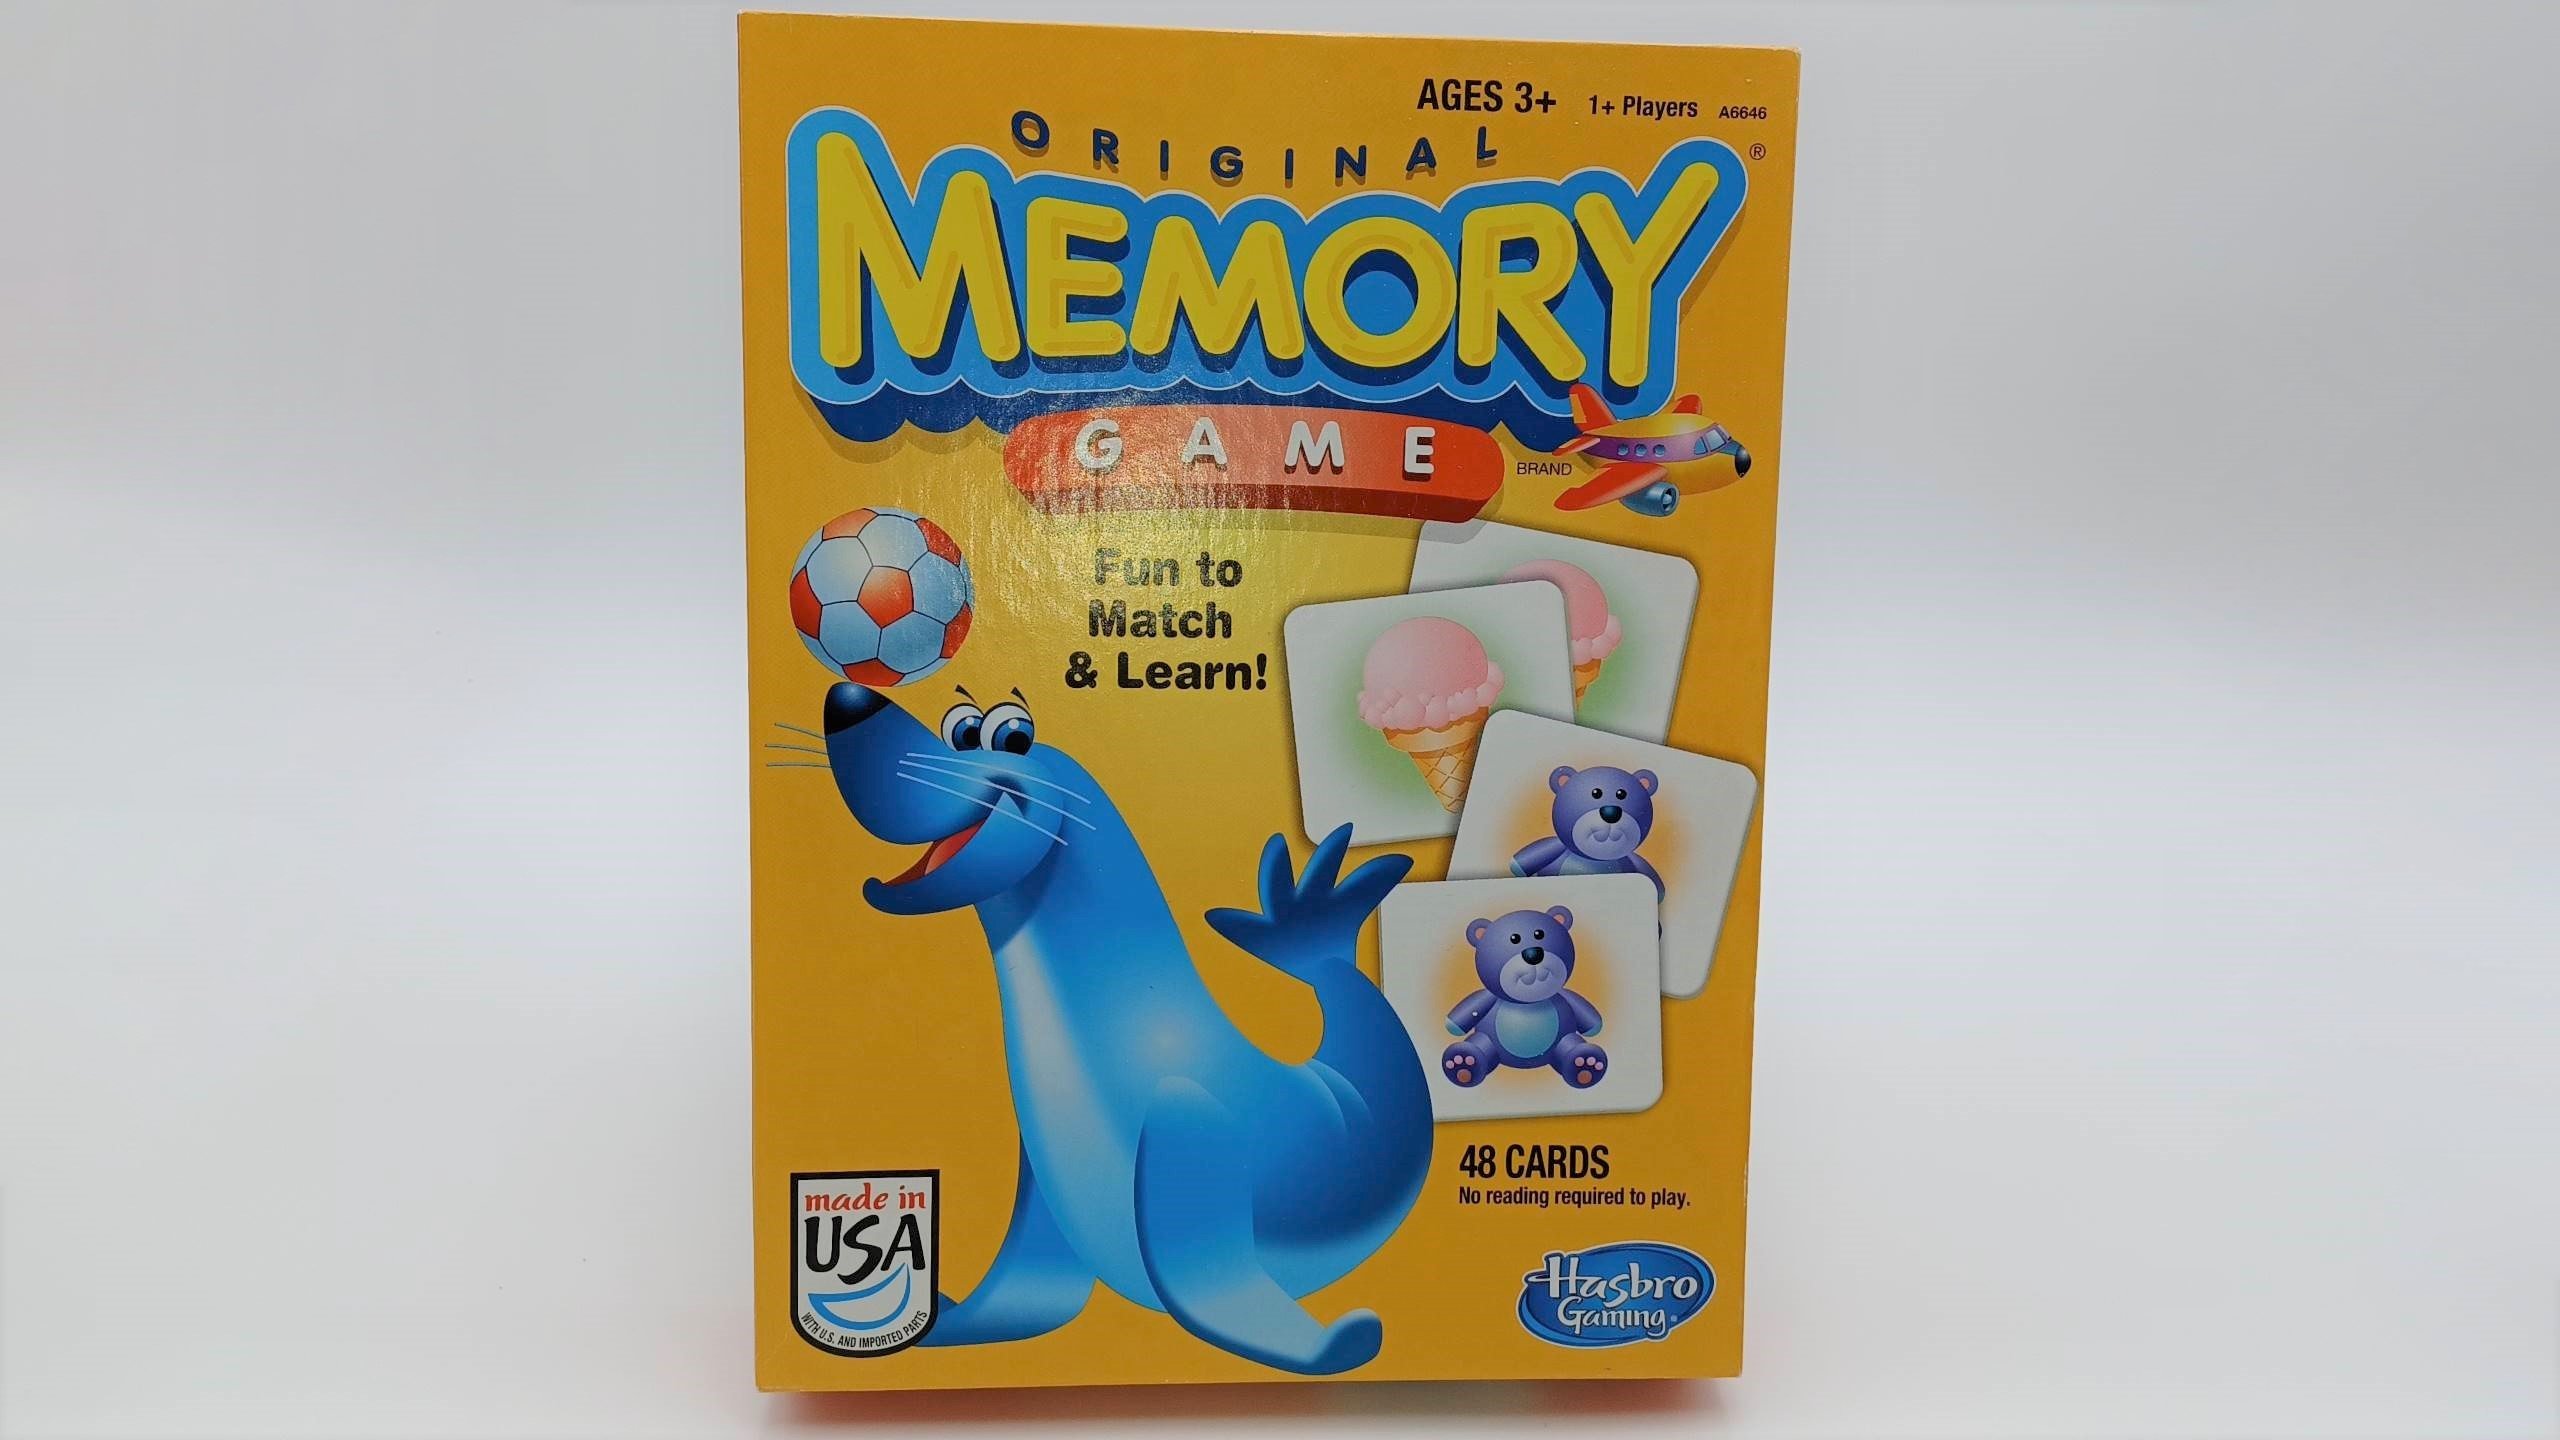 Box for Original Memory Game